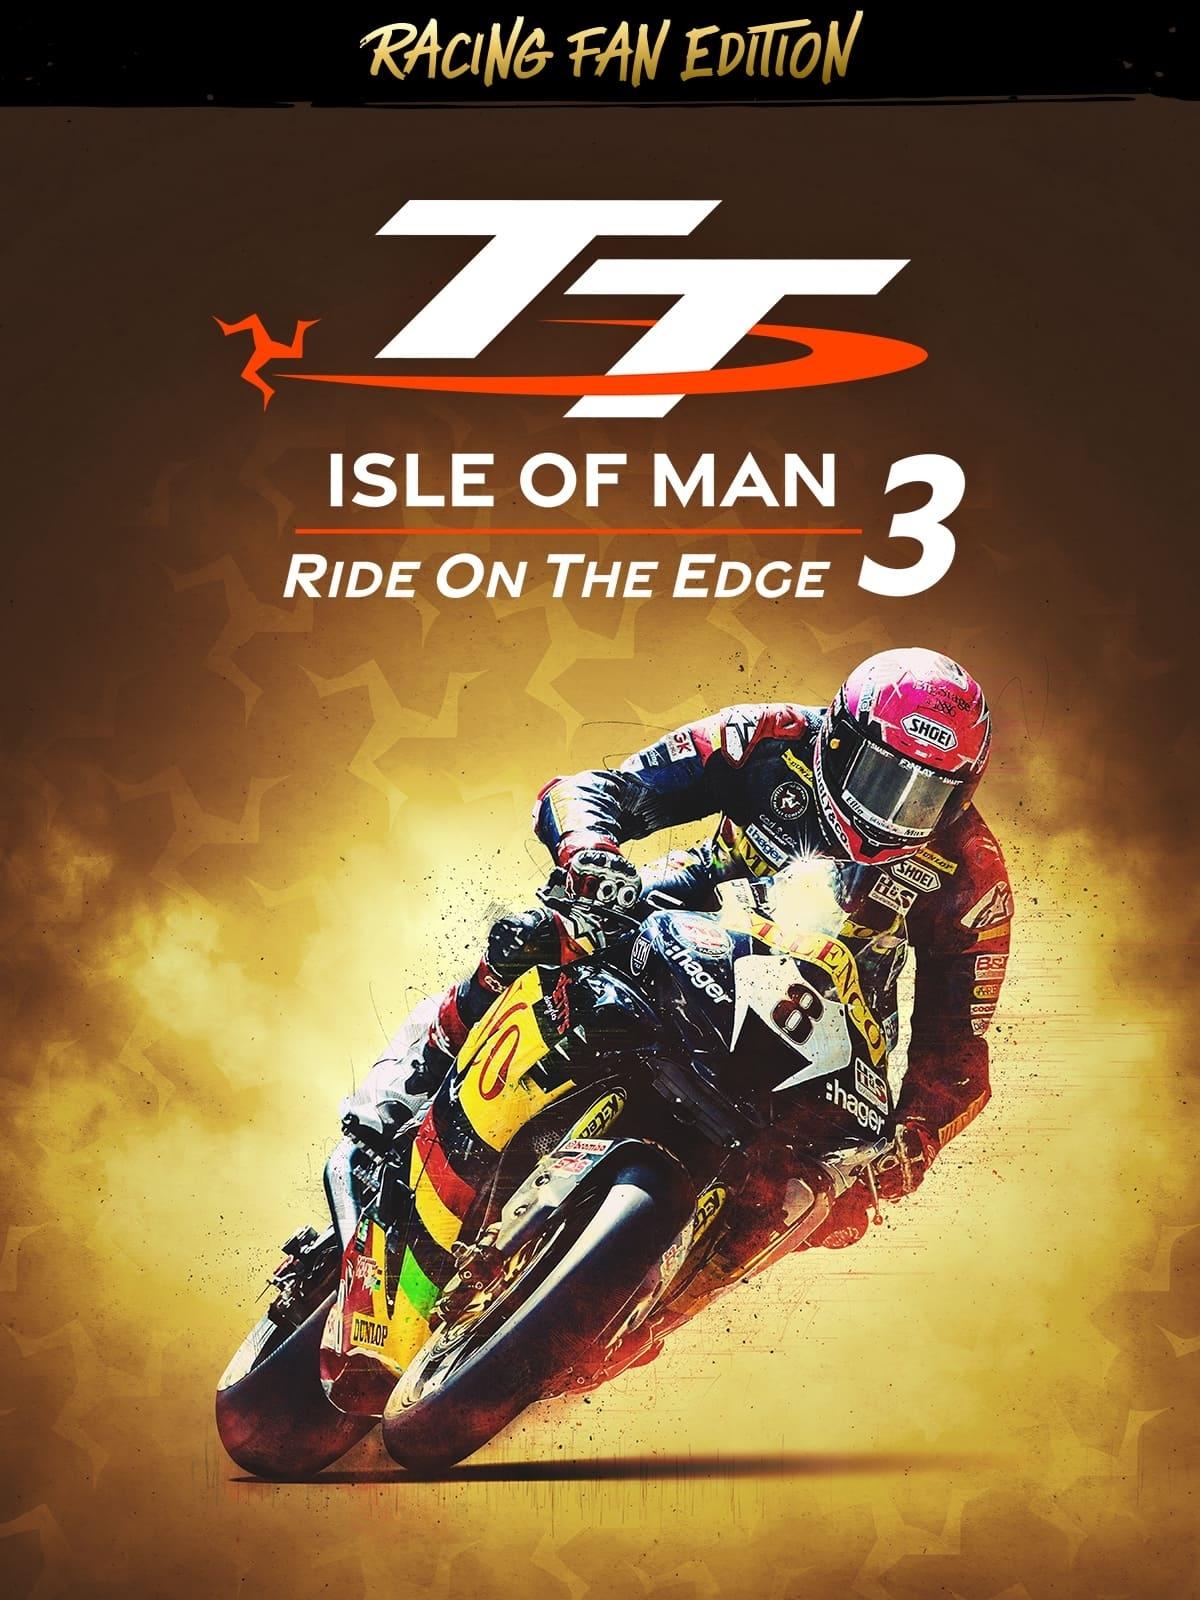 TT Isle of Man: Ride on the Edge 3 Racing Fan Edition | ROW (a9c0b225-d12c-4e42-837b-944693d6739b)